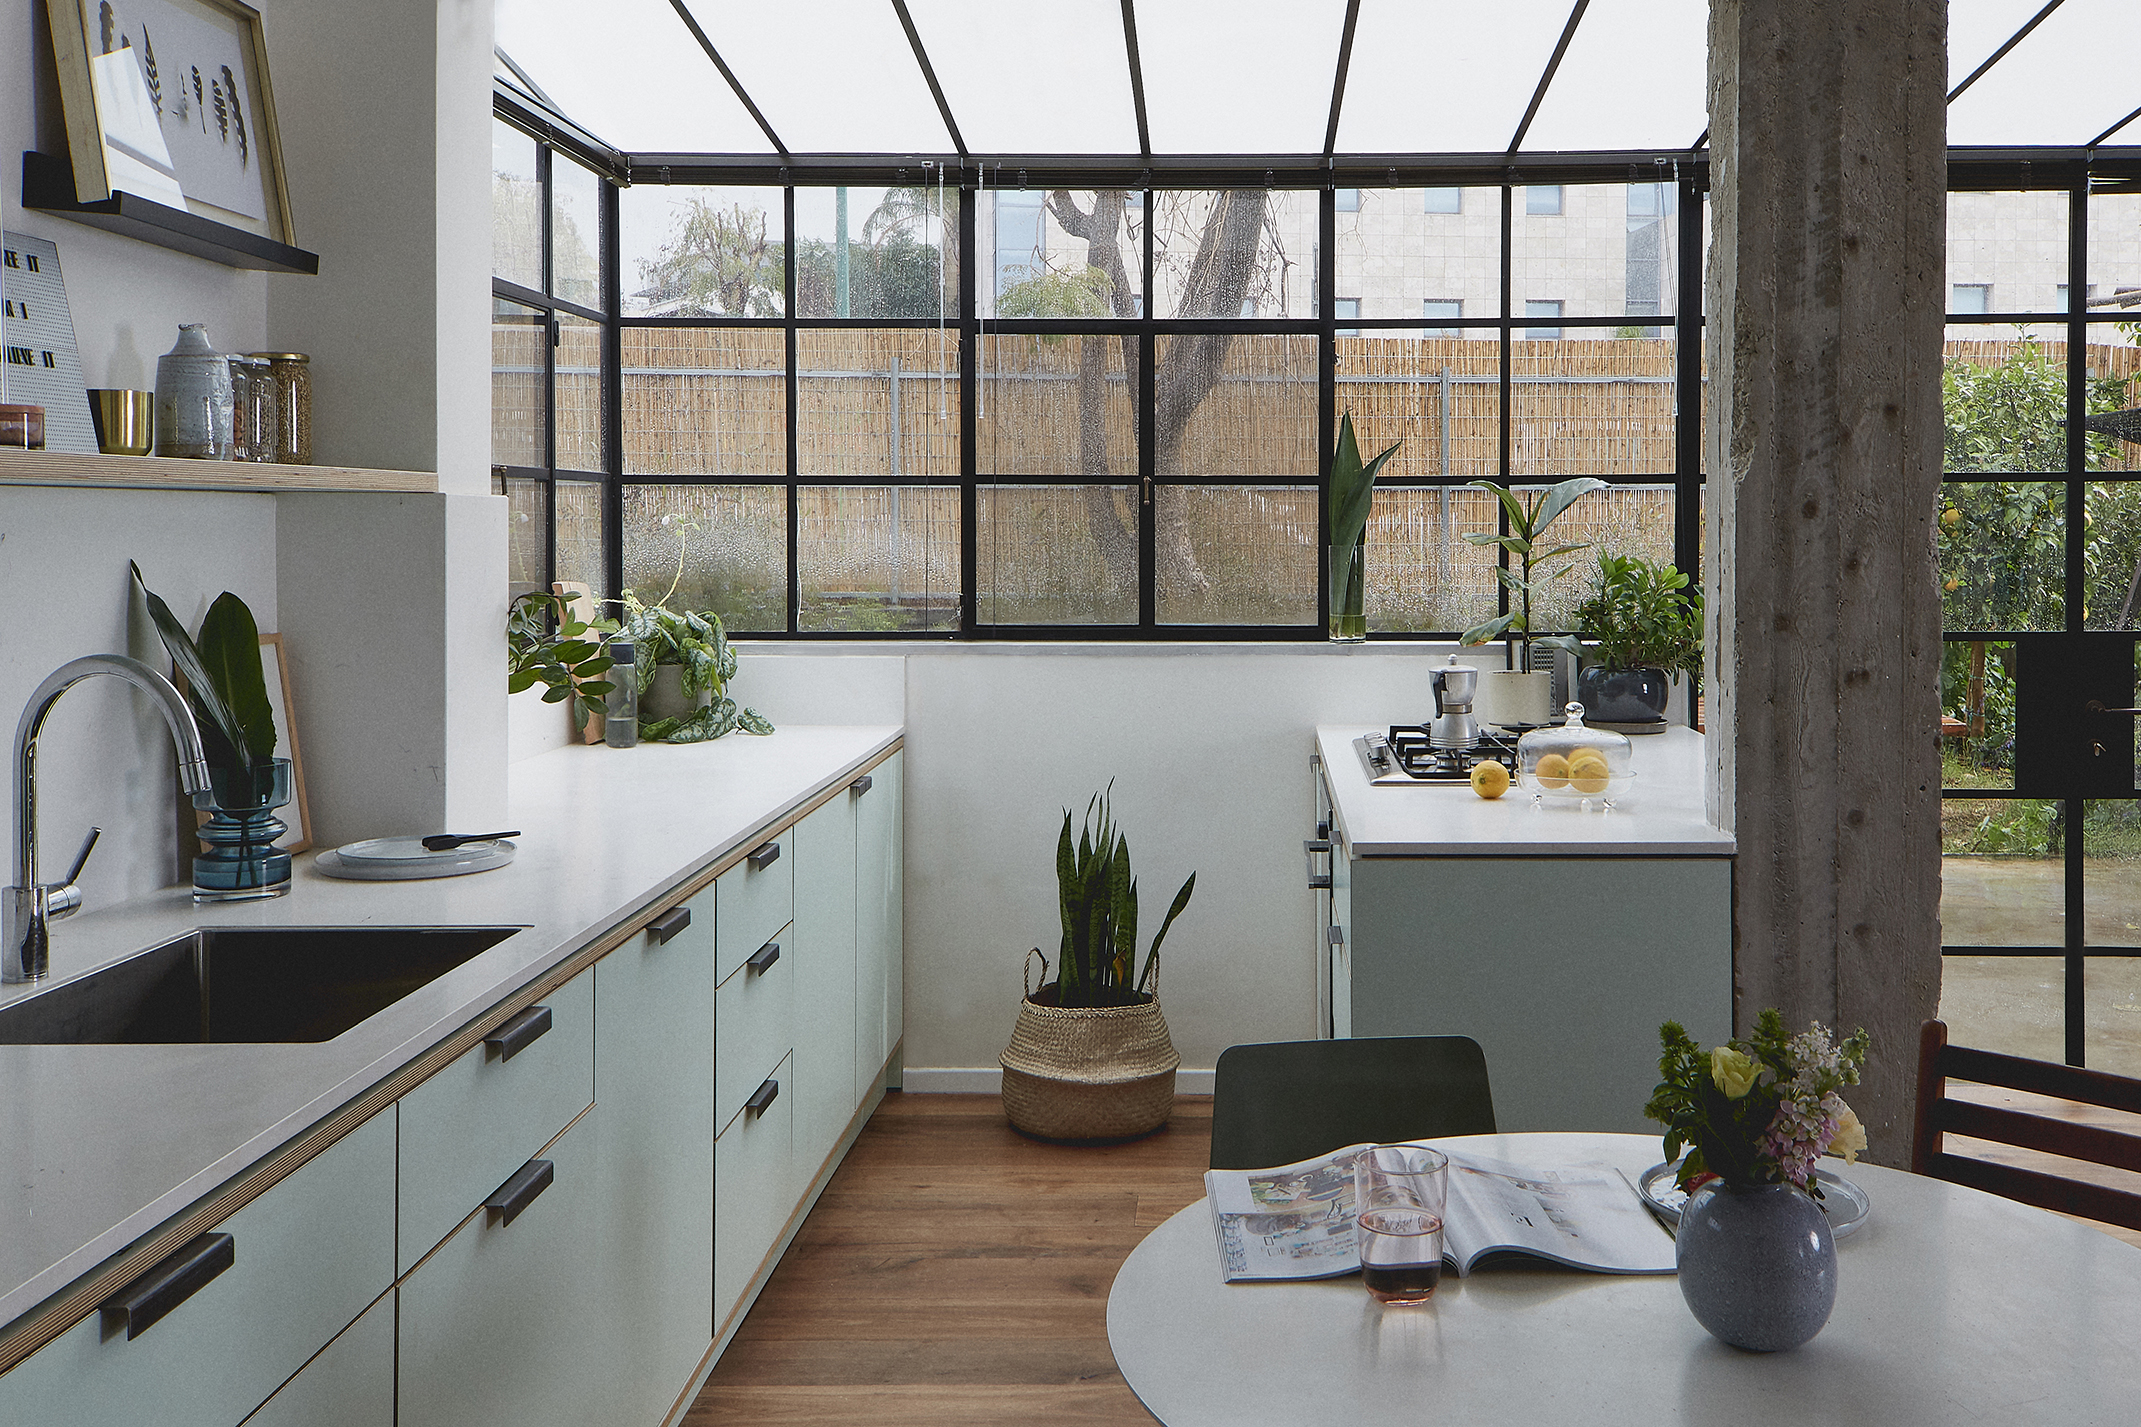 Green house-like kitchen modern hues mint plywood